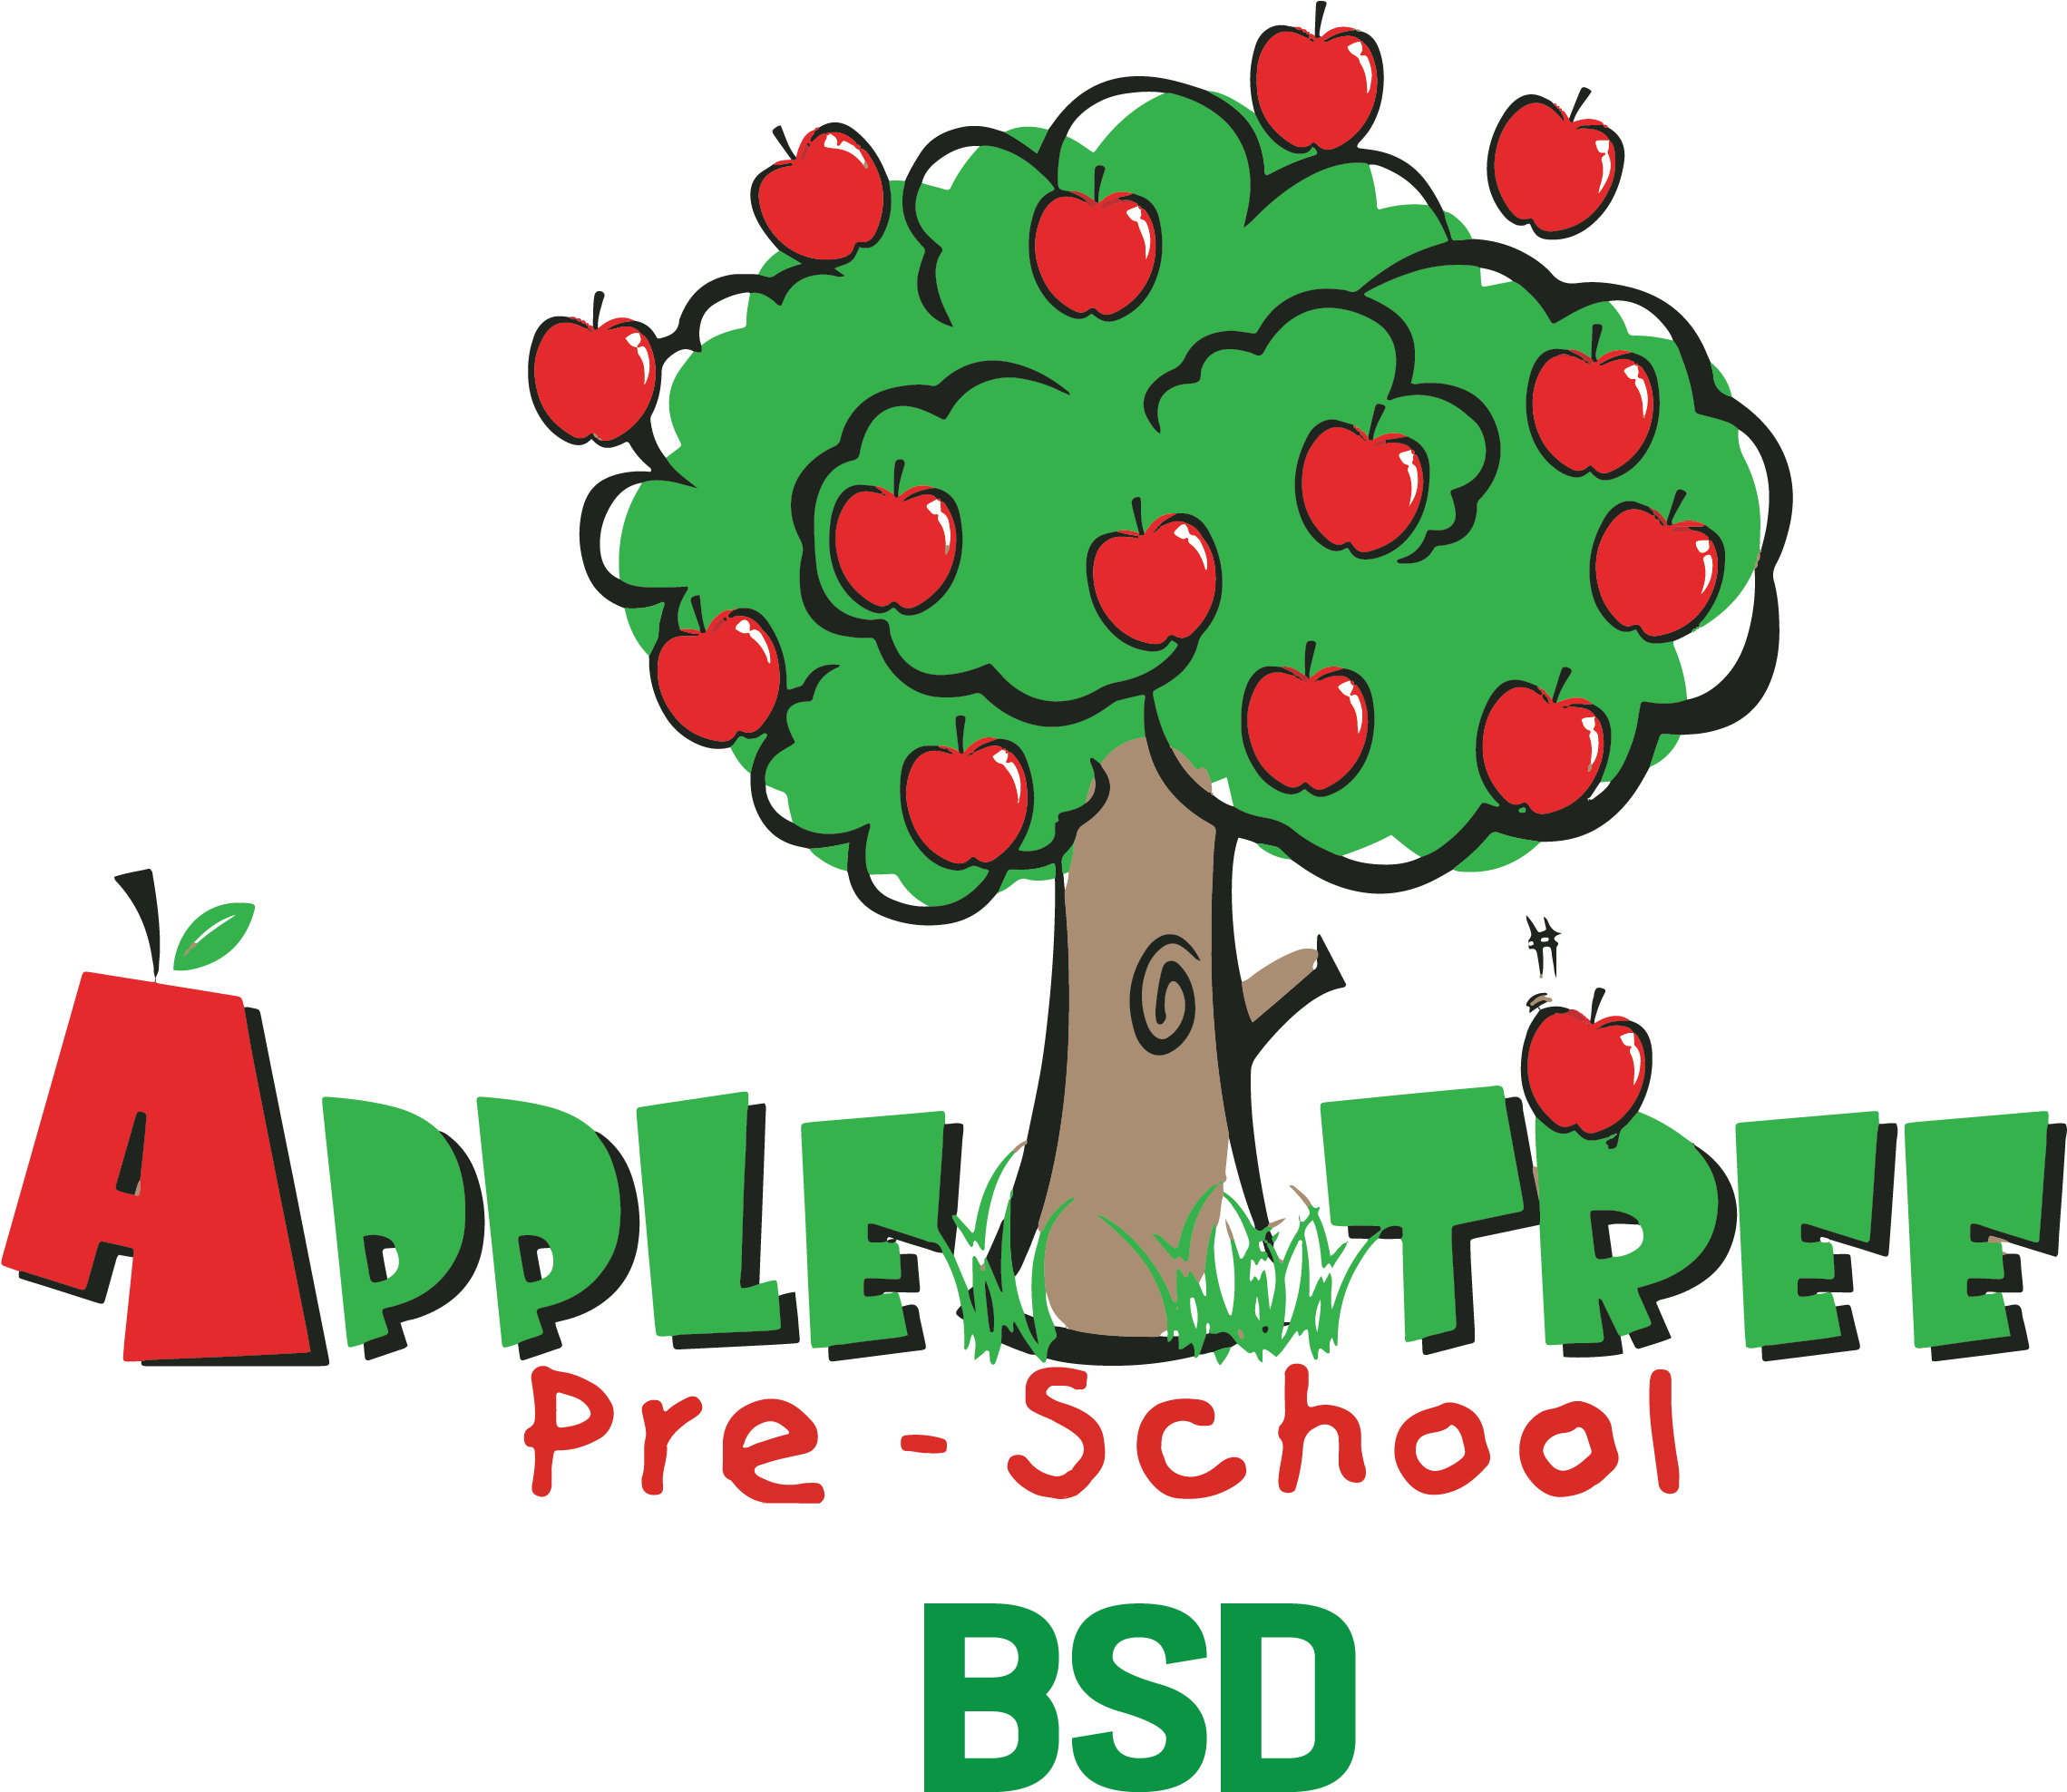 Apple Tree Pre-school Bsd - Apple Tree Pre School (2480x2263), Png Download